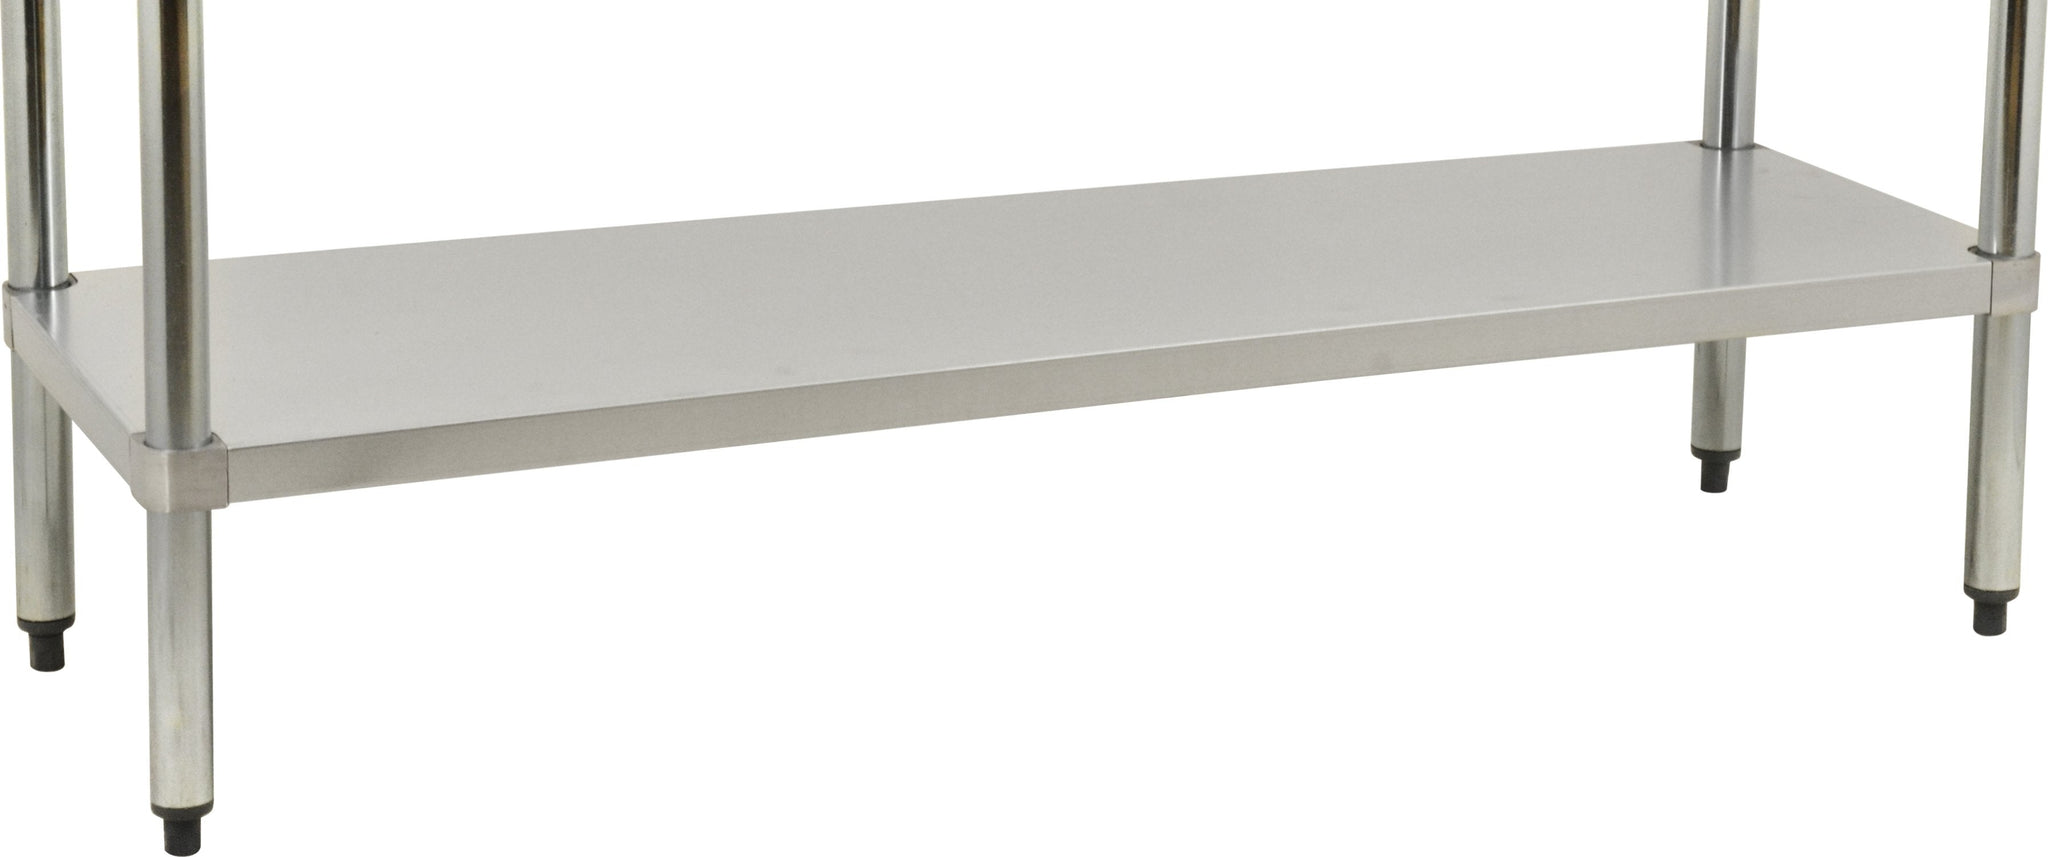 Omcan - 30” x 36” Stainless Steel Undershelf For Work Tables, 2/cs - 21616